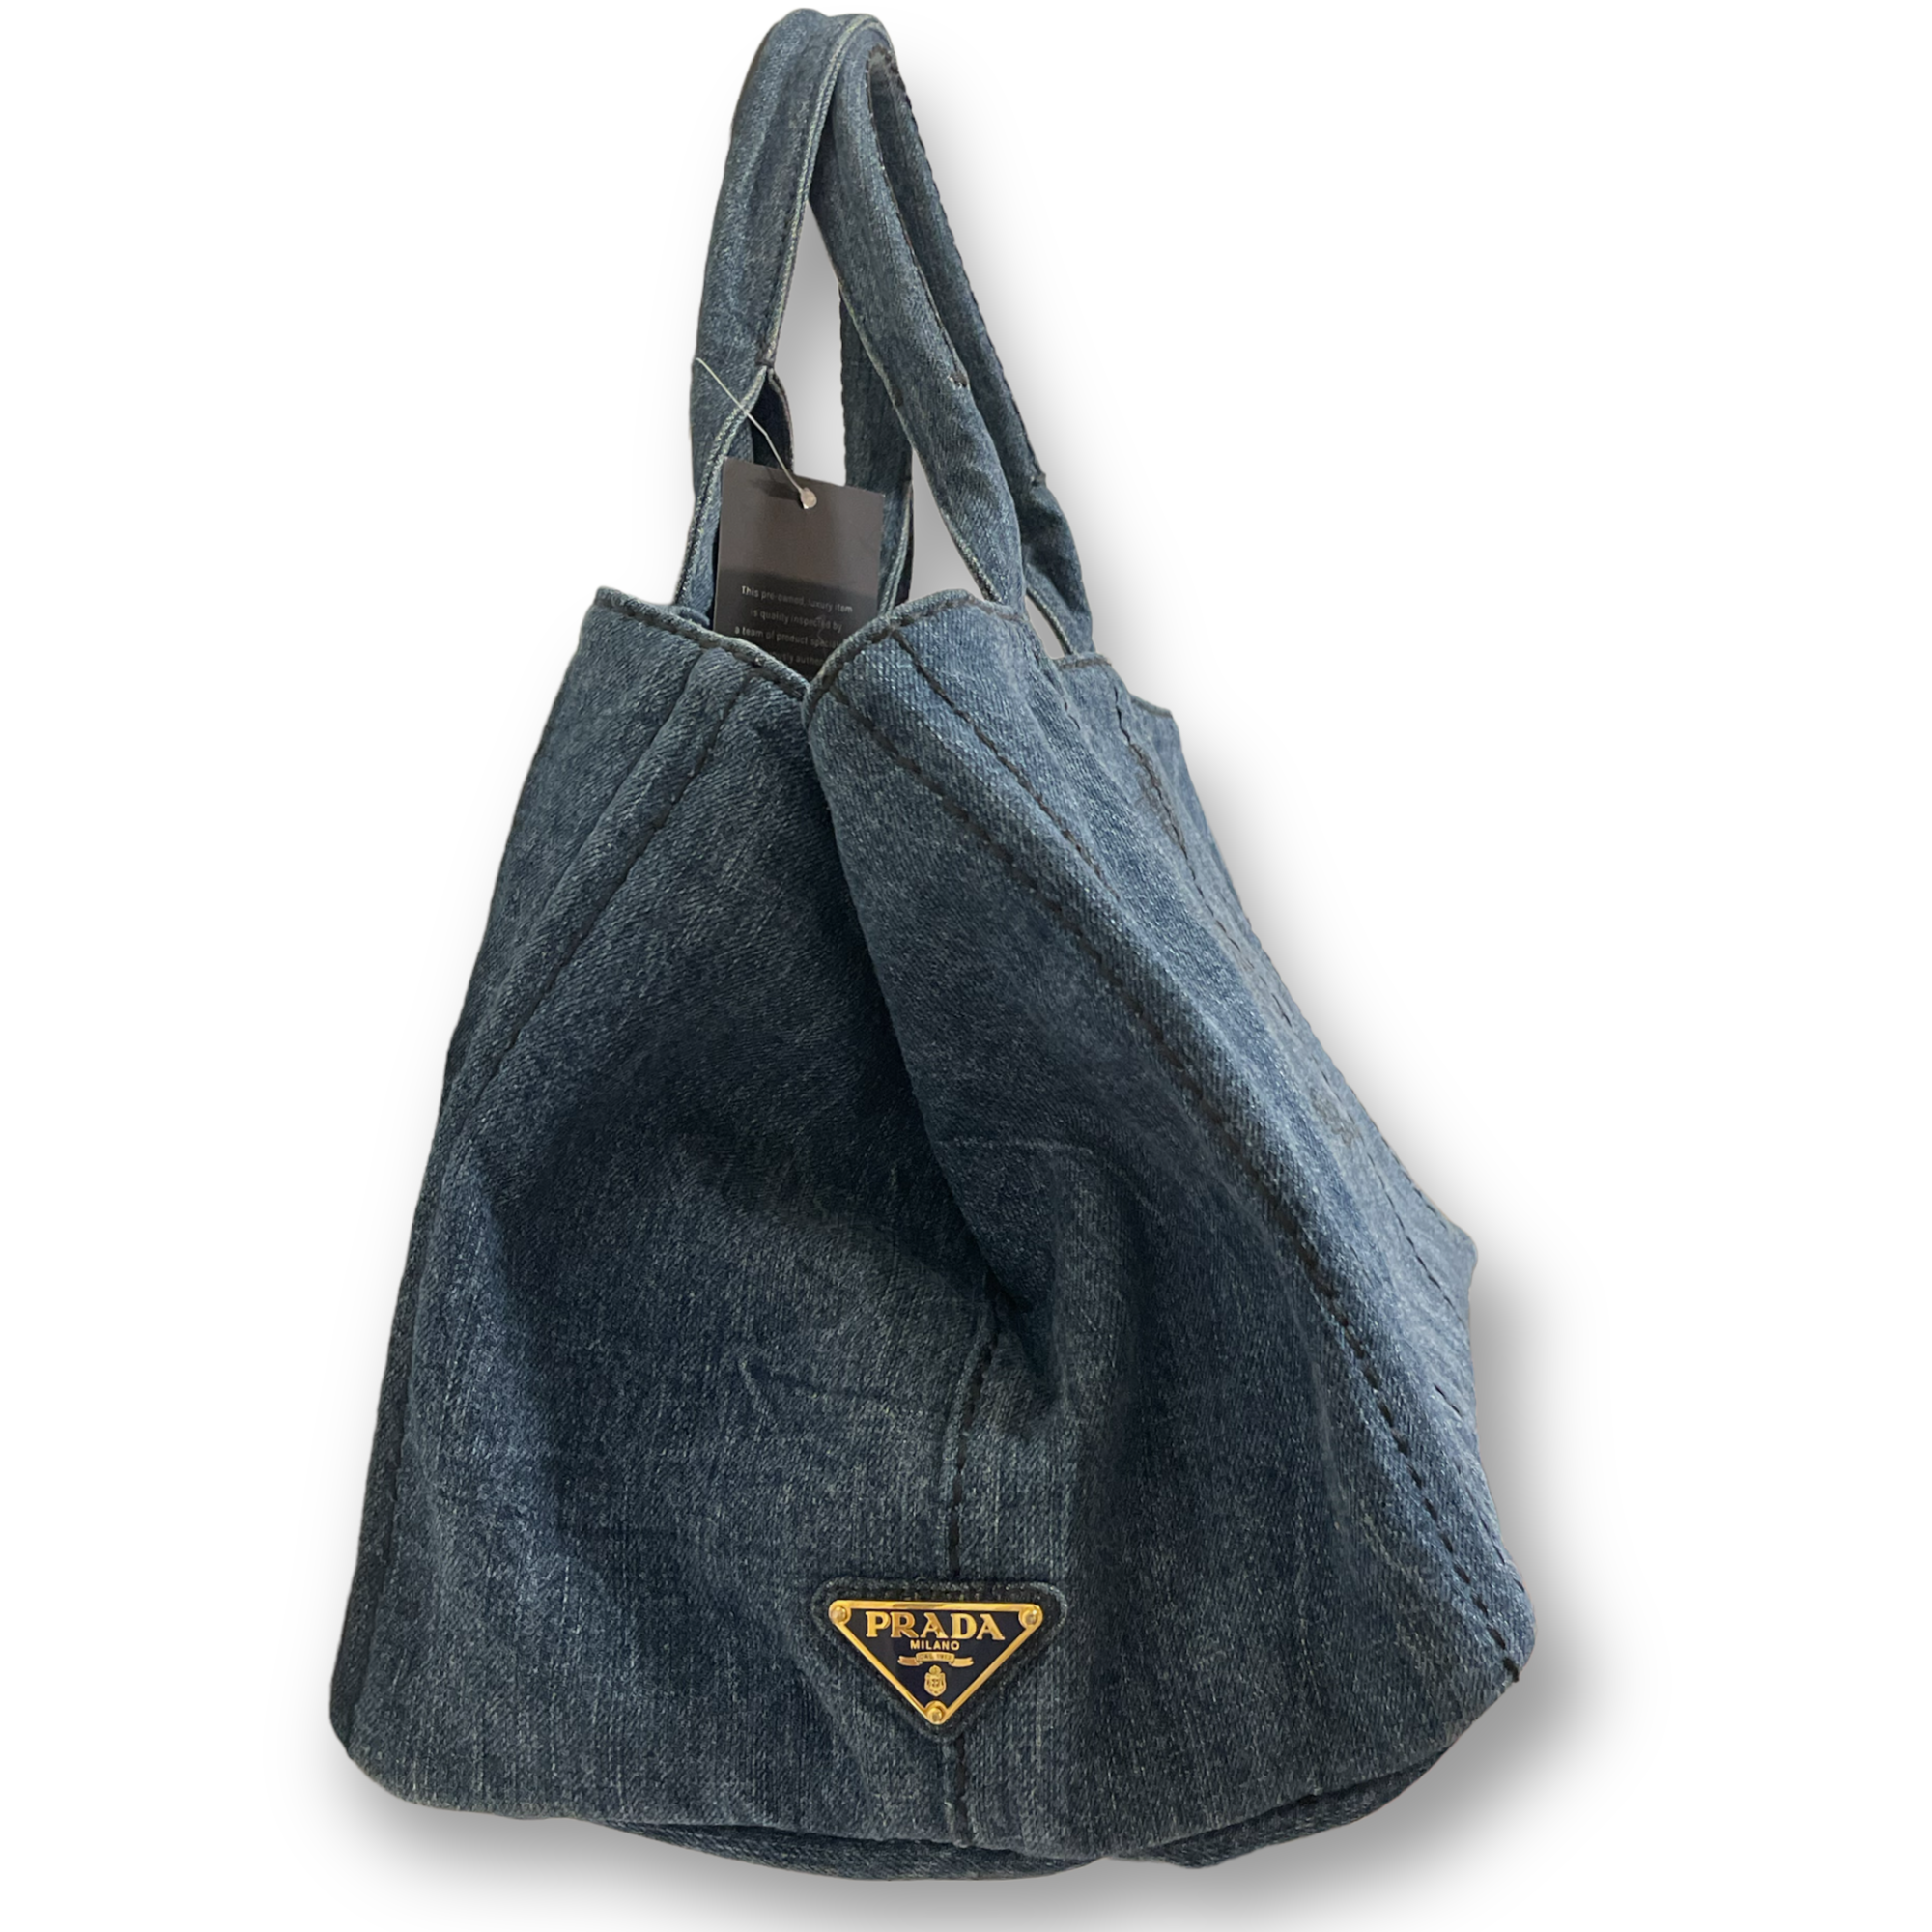 PRADA Canapa Denim Blue Tote Bag |Size: TU|